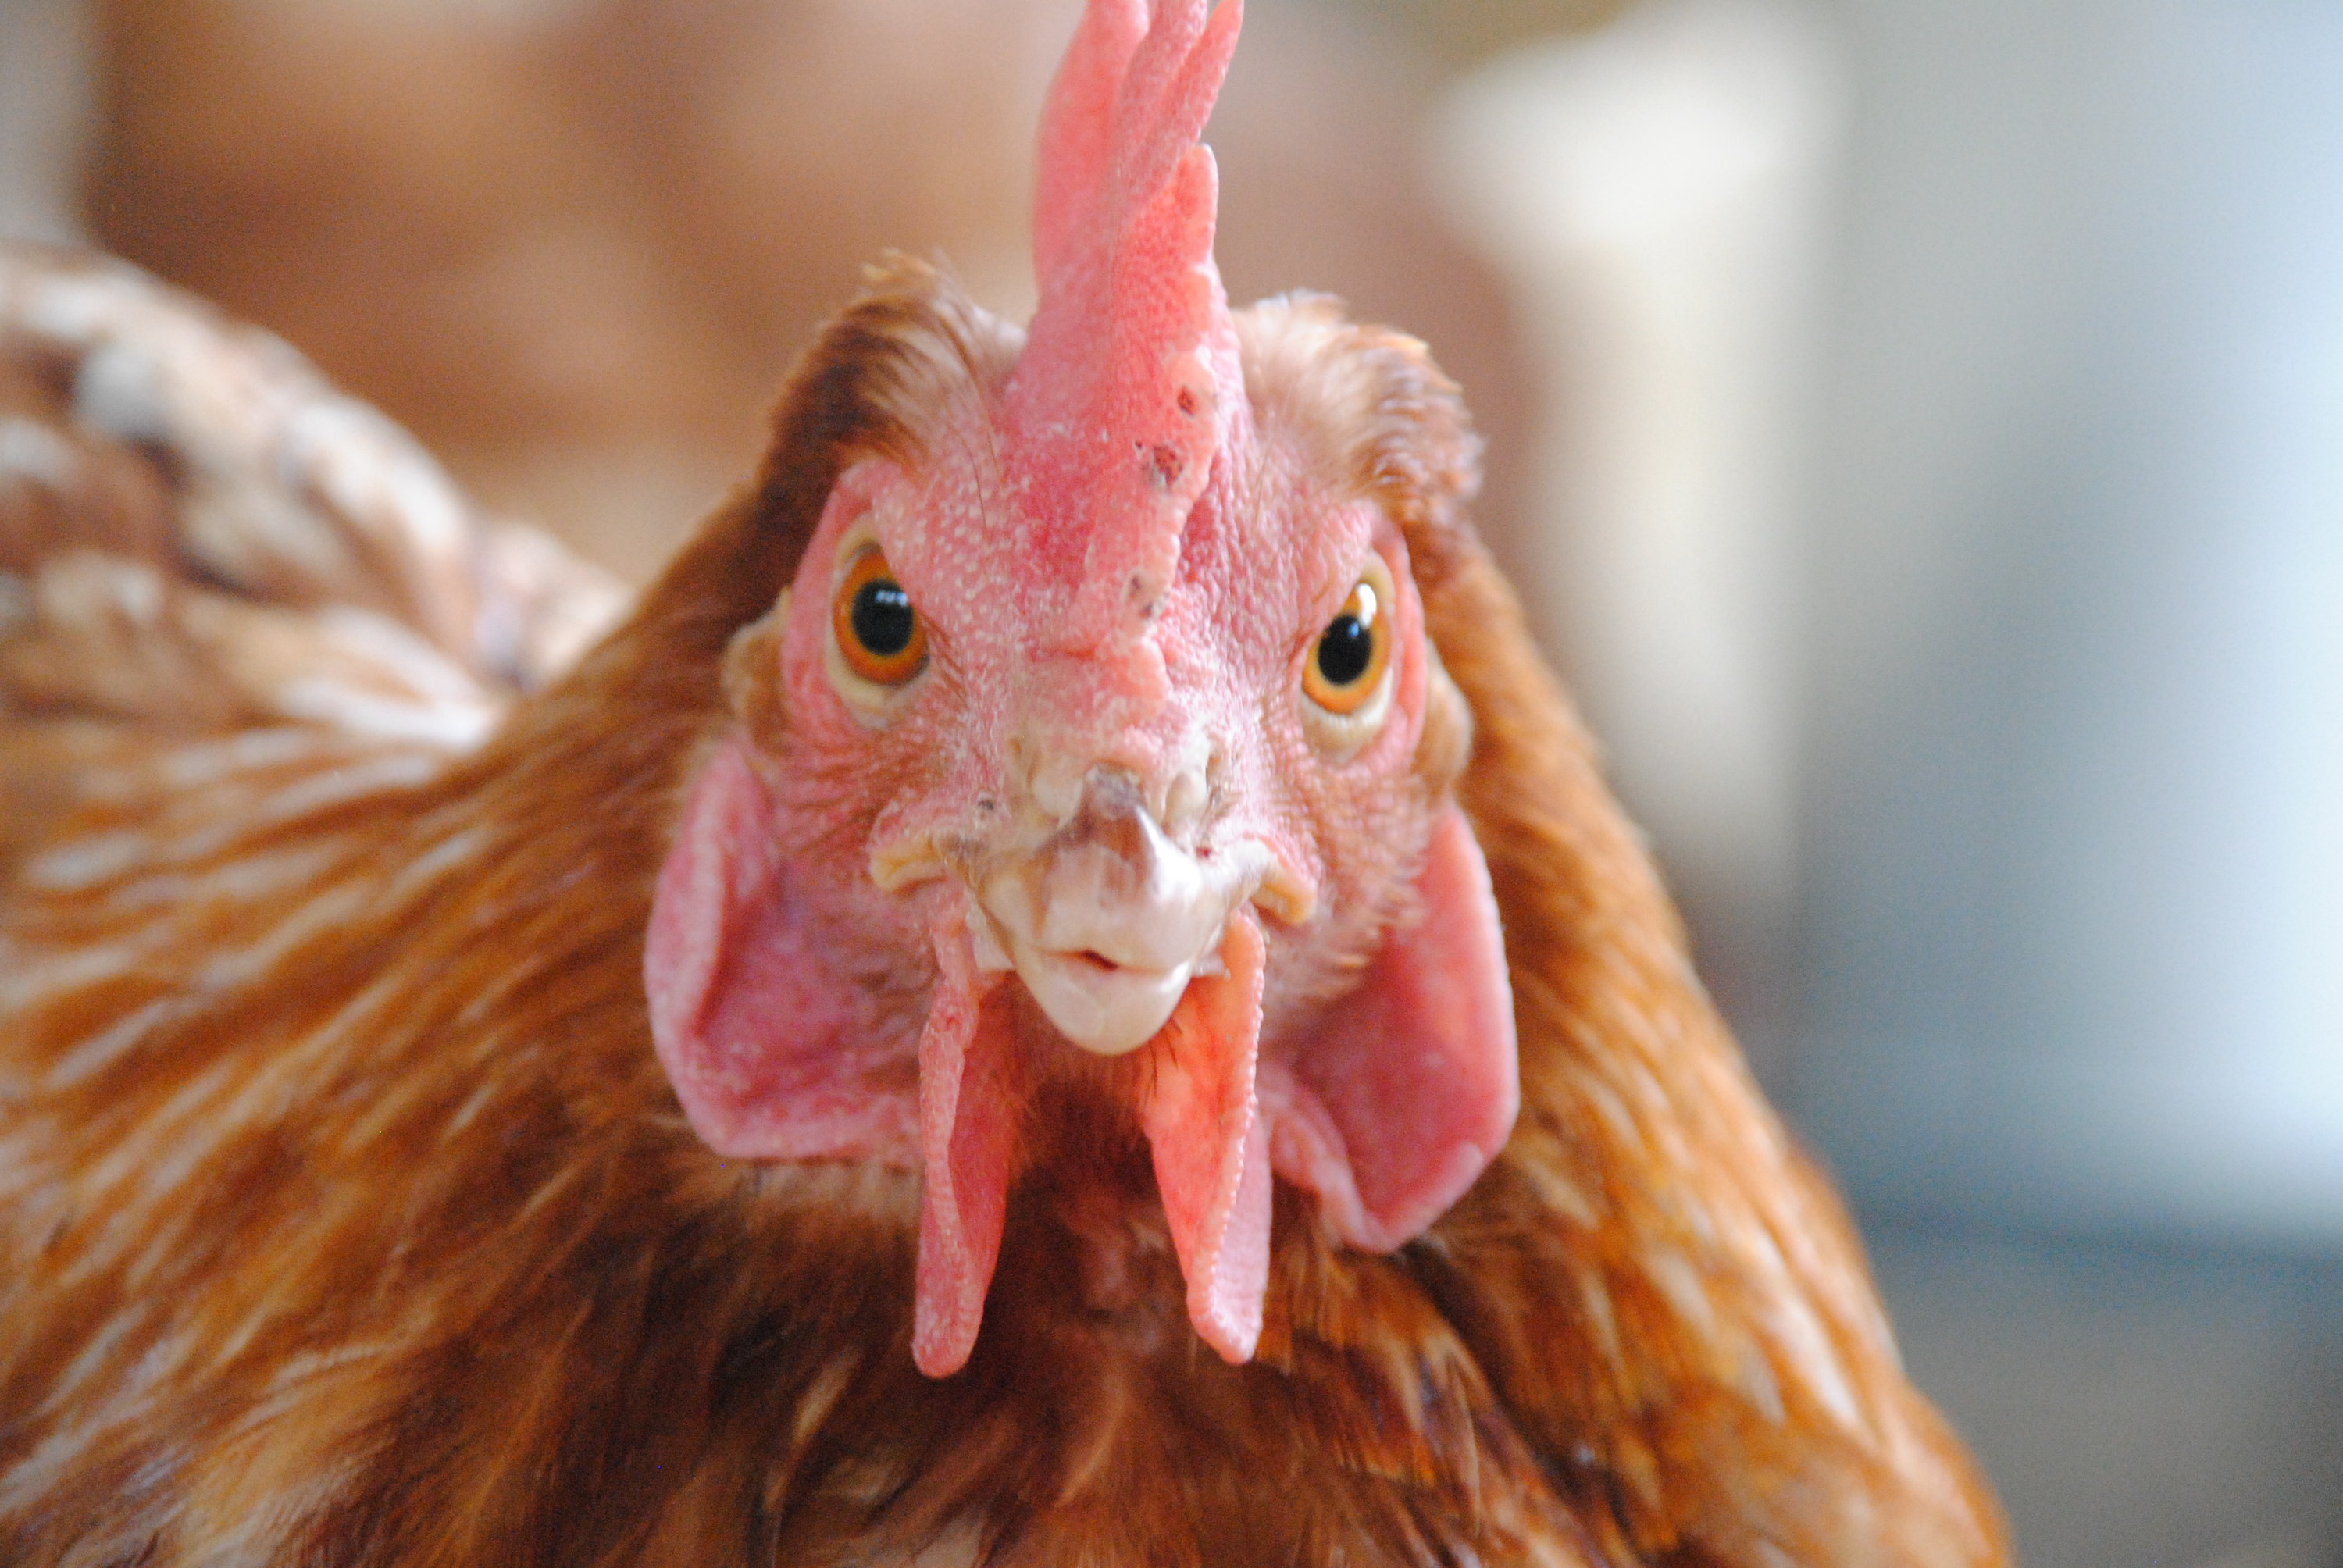 a close-up of a chicken